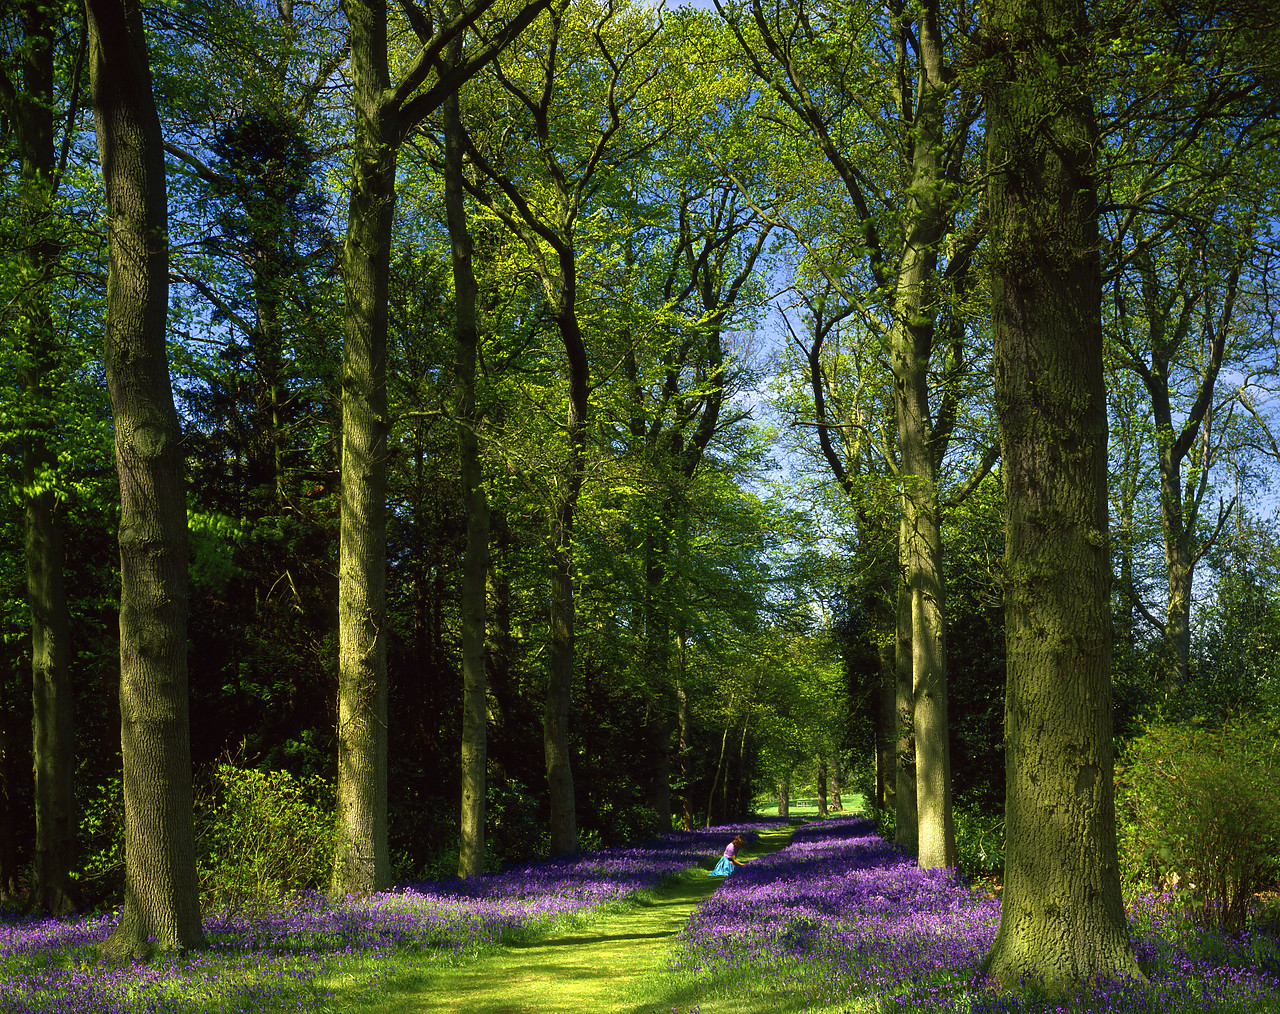 #87870-1 - Pathway through Bluebells, Blickling, Norfolk, England